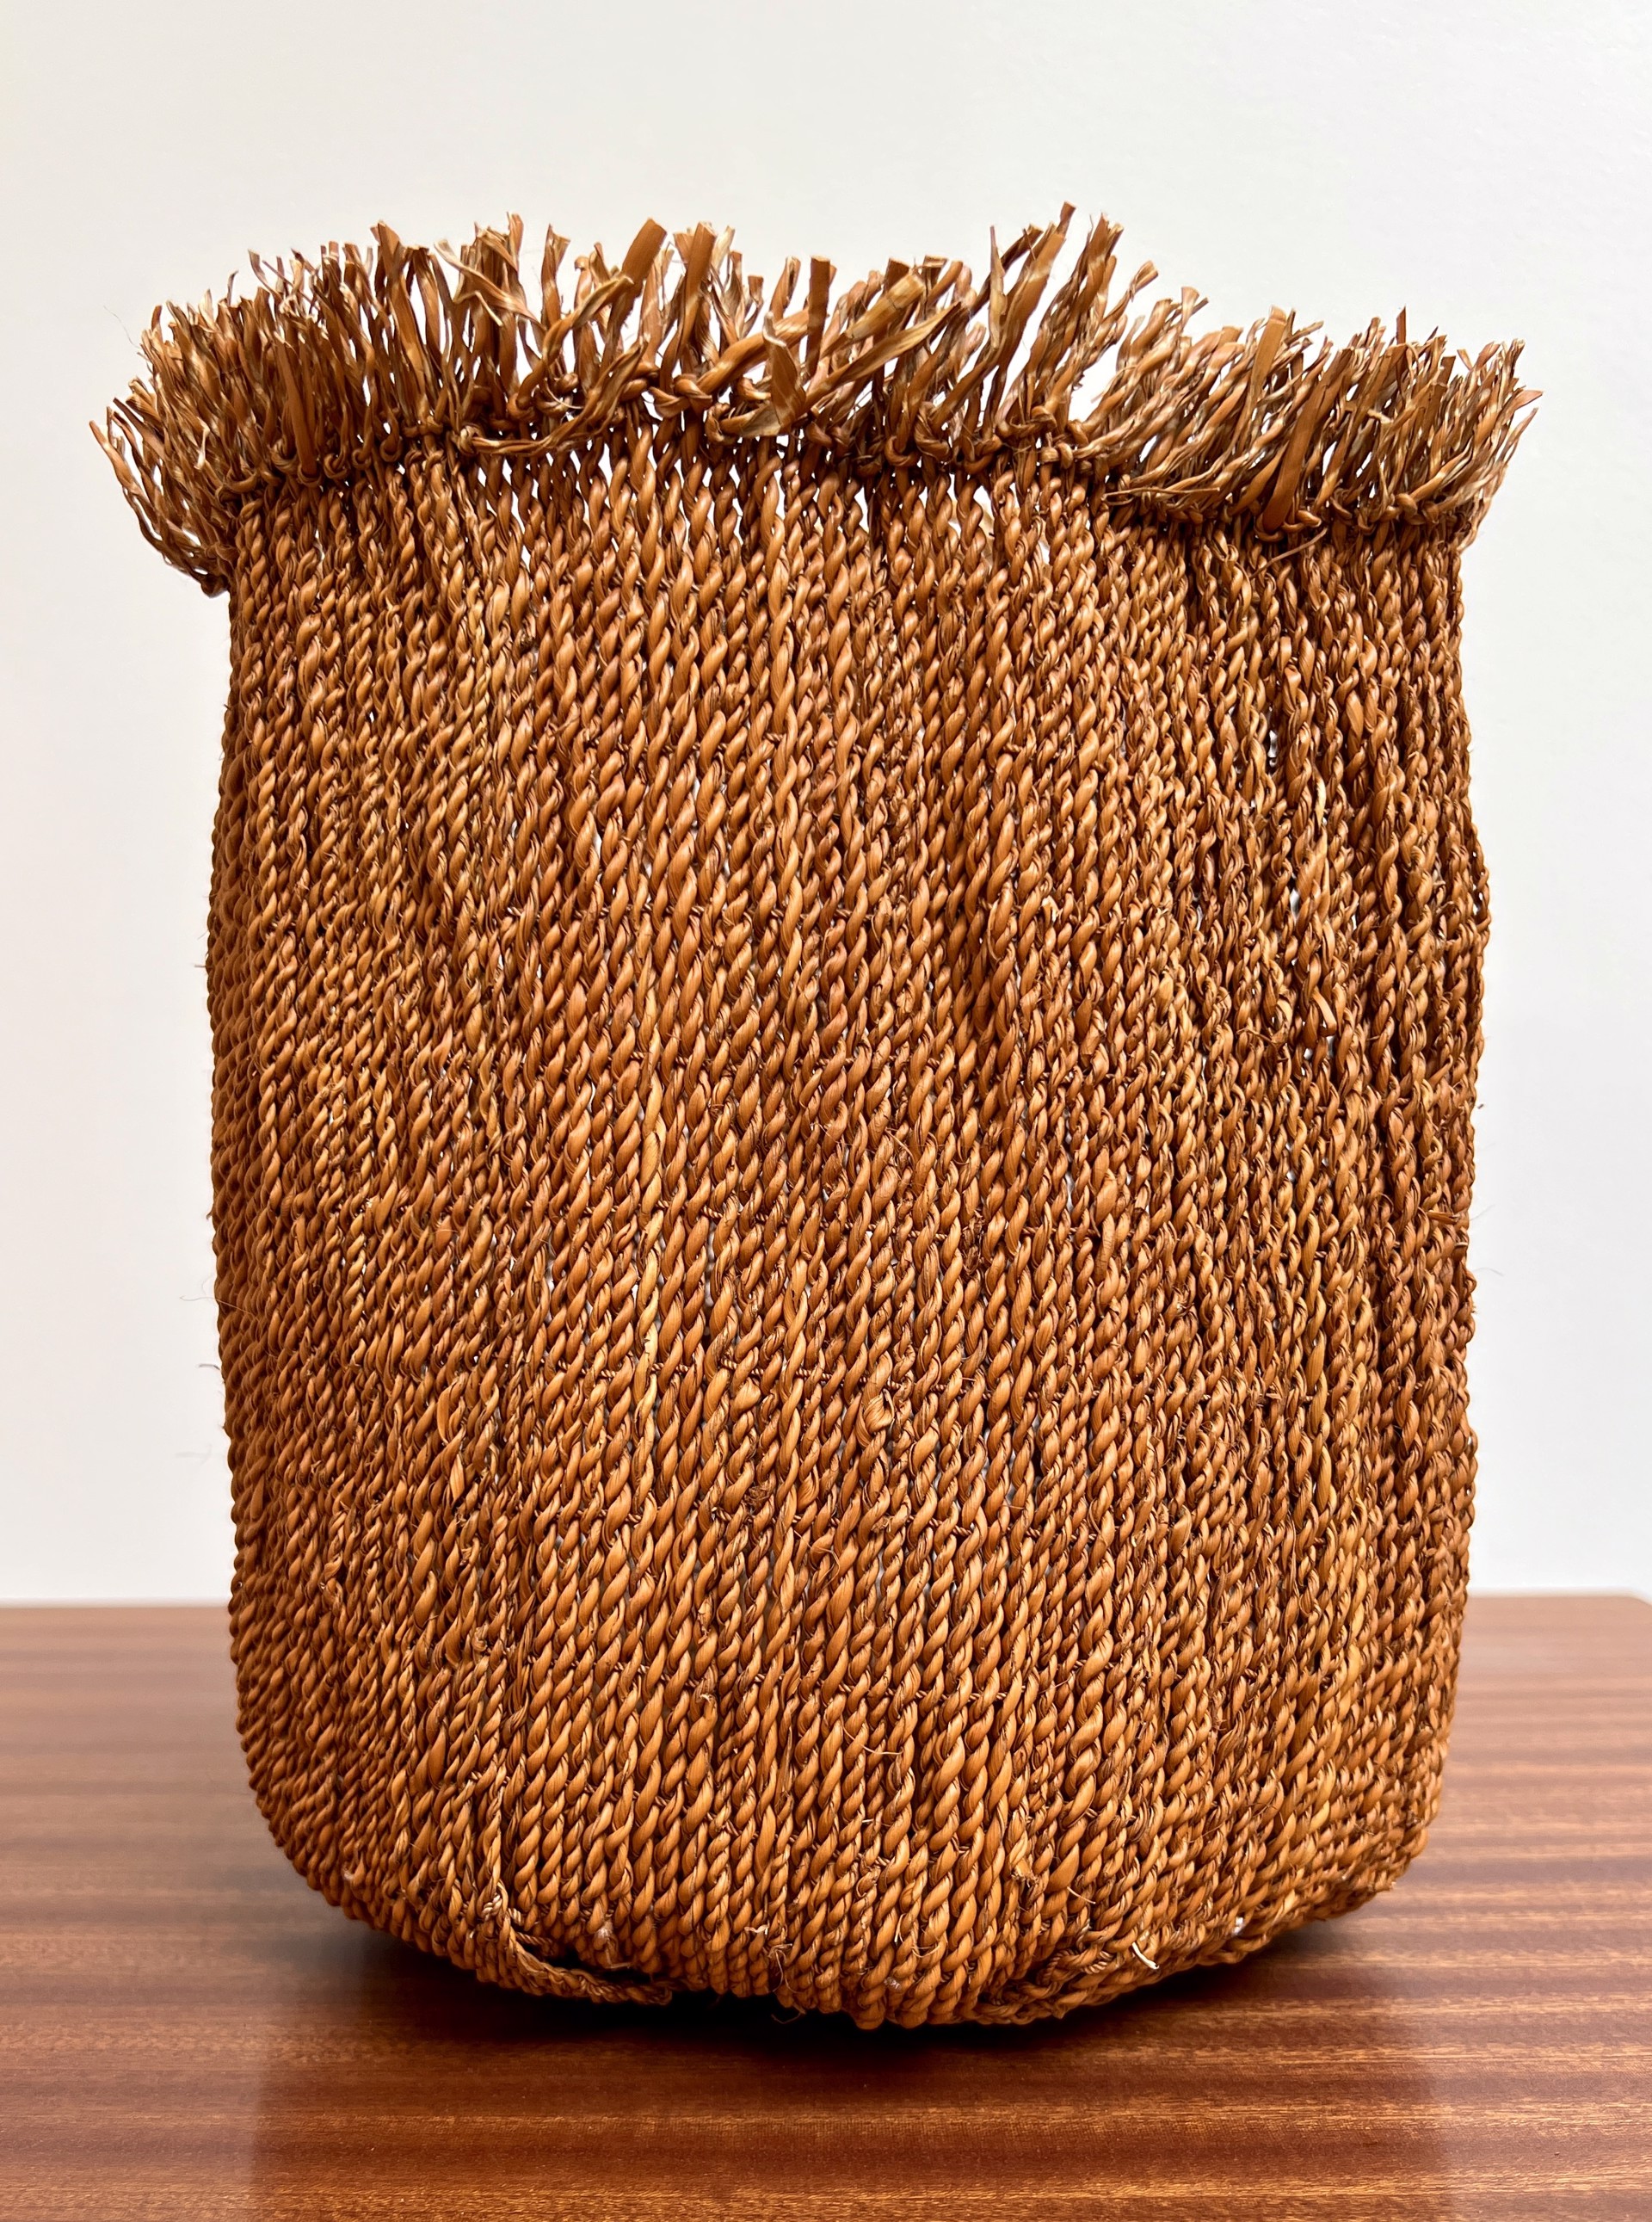 Caramel Beer Basket 1 by Omba Arts